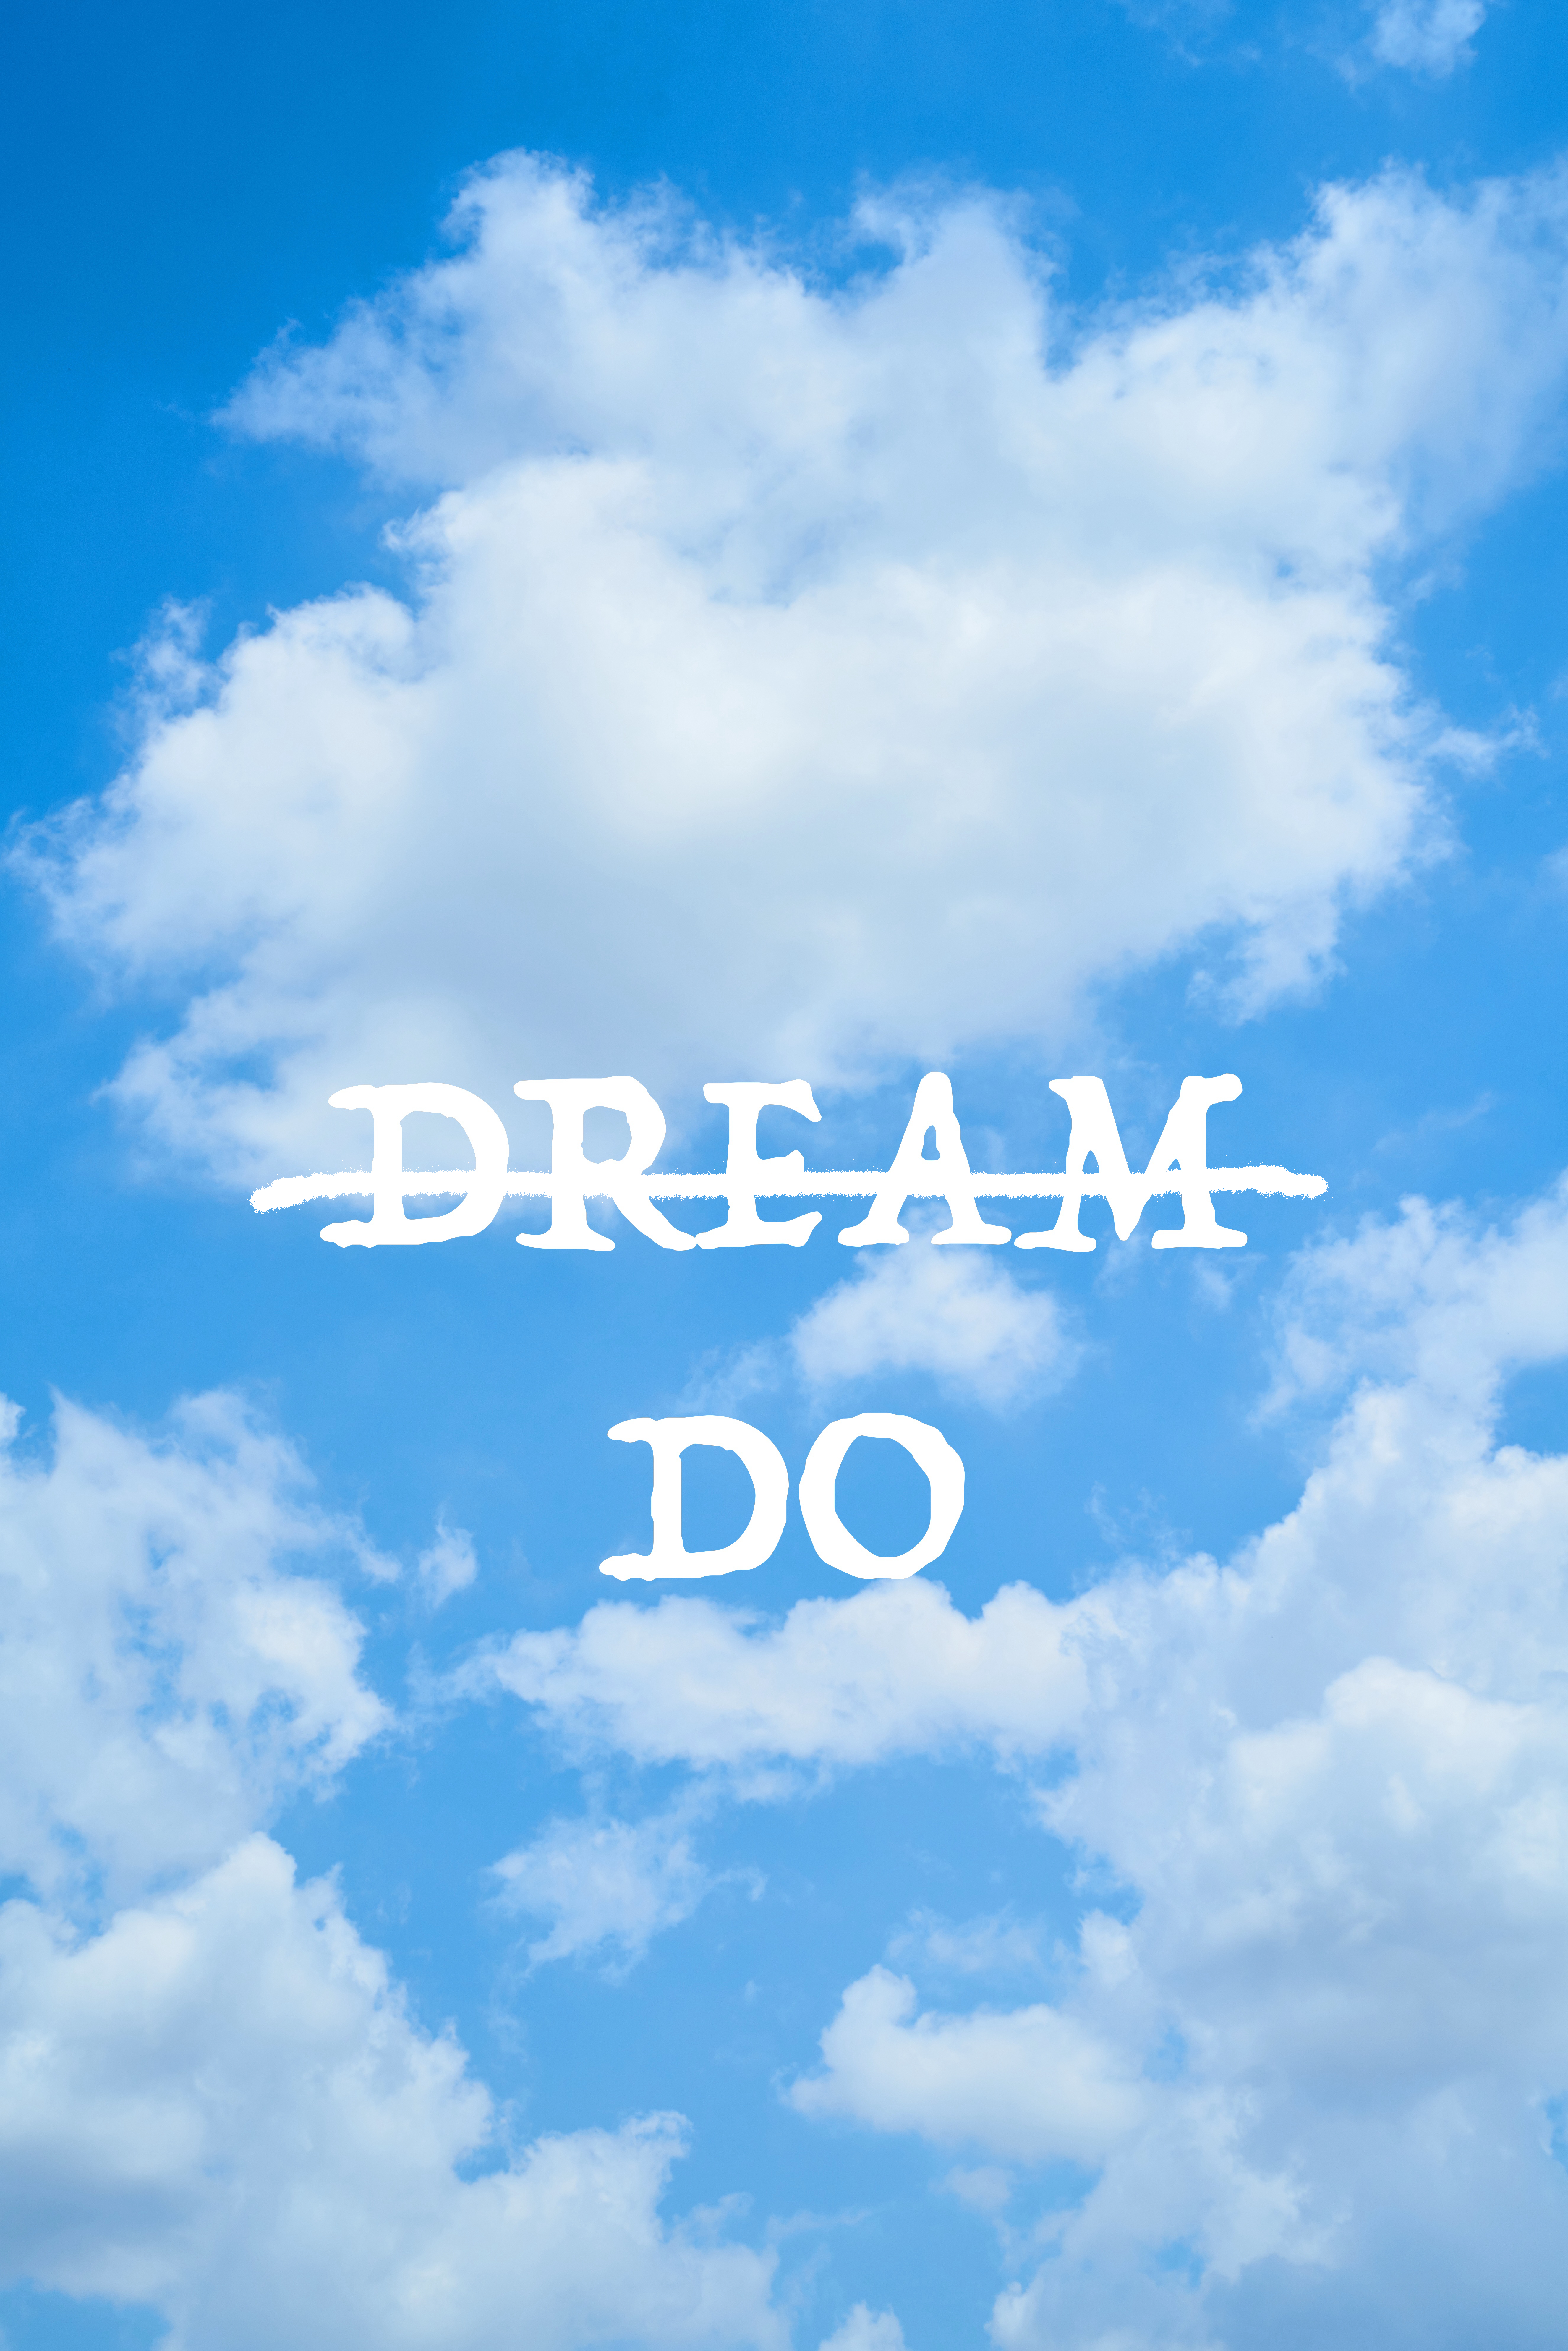 motivation, inspiration, reverie, sky, clouds, words, inscription, dreams, action, act phone wallpaper